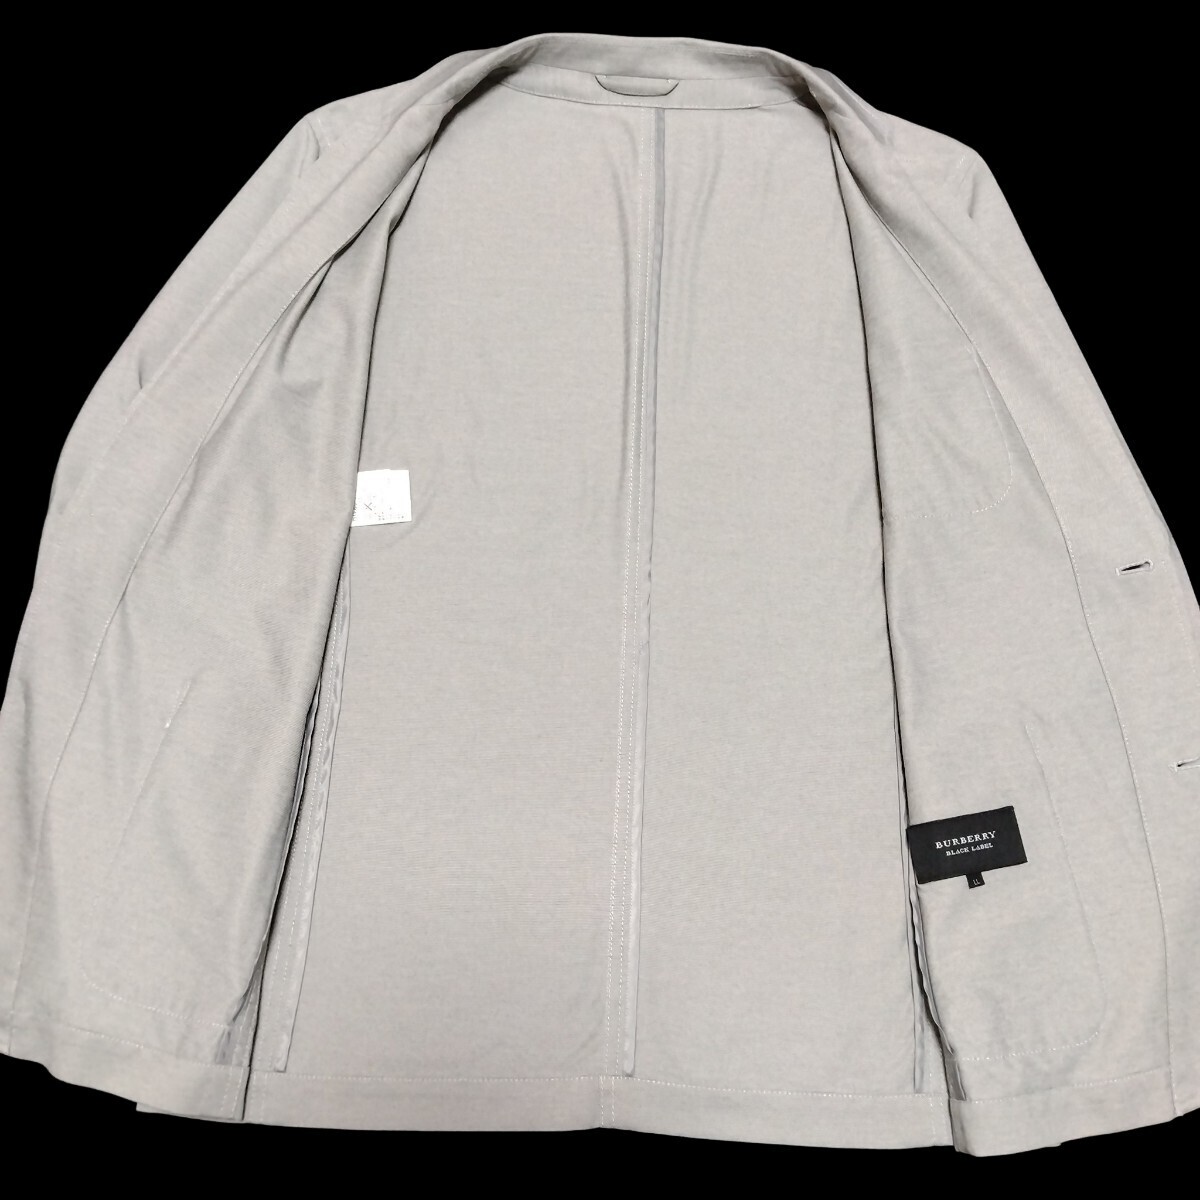  Burberry Black Label # воротник обратная сторона / манжеты обратная сторона noba проверка редкий LL размер серый серия summer tailored jacket BURBERRY BLACK LABEL